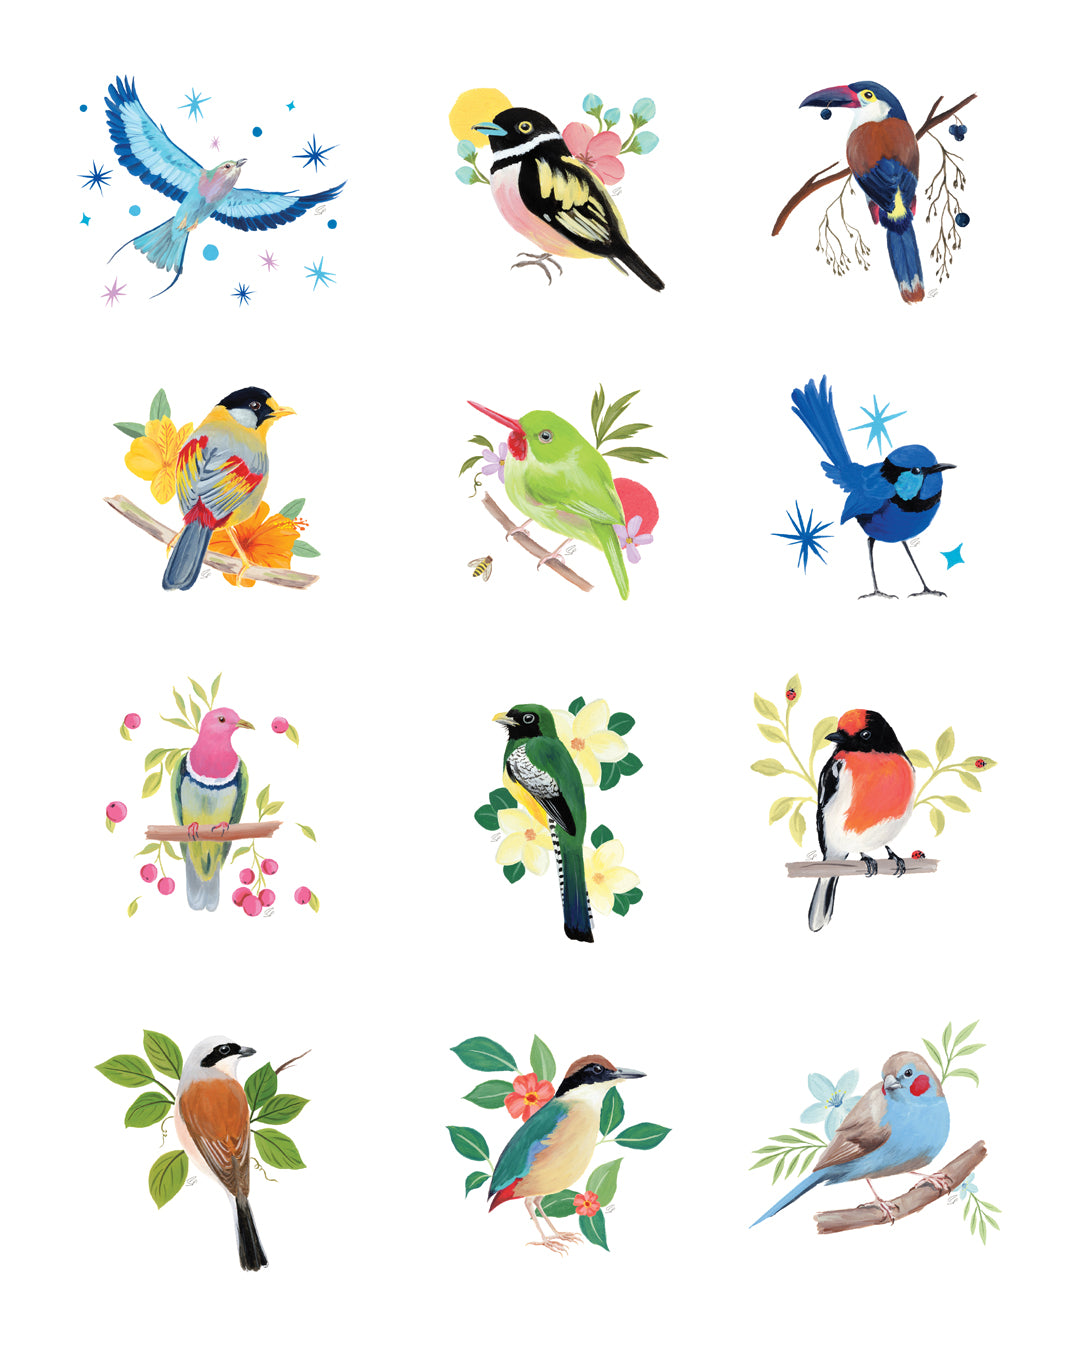 2024 Desk Calendar - The World of Birds